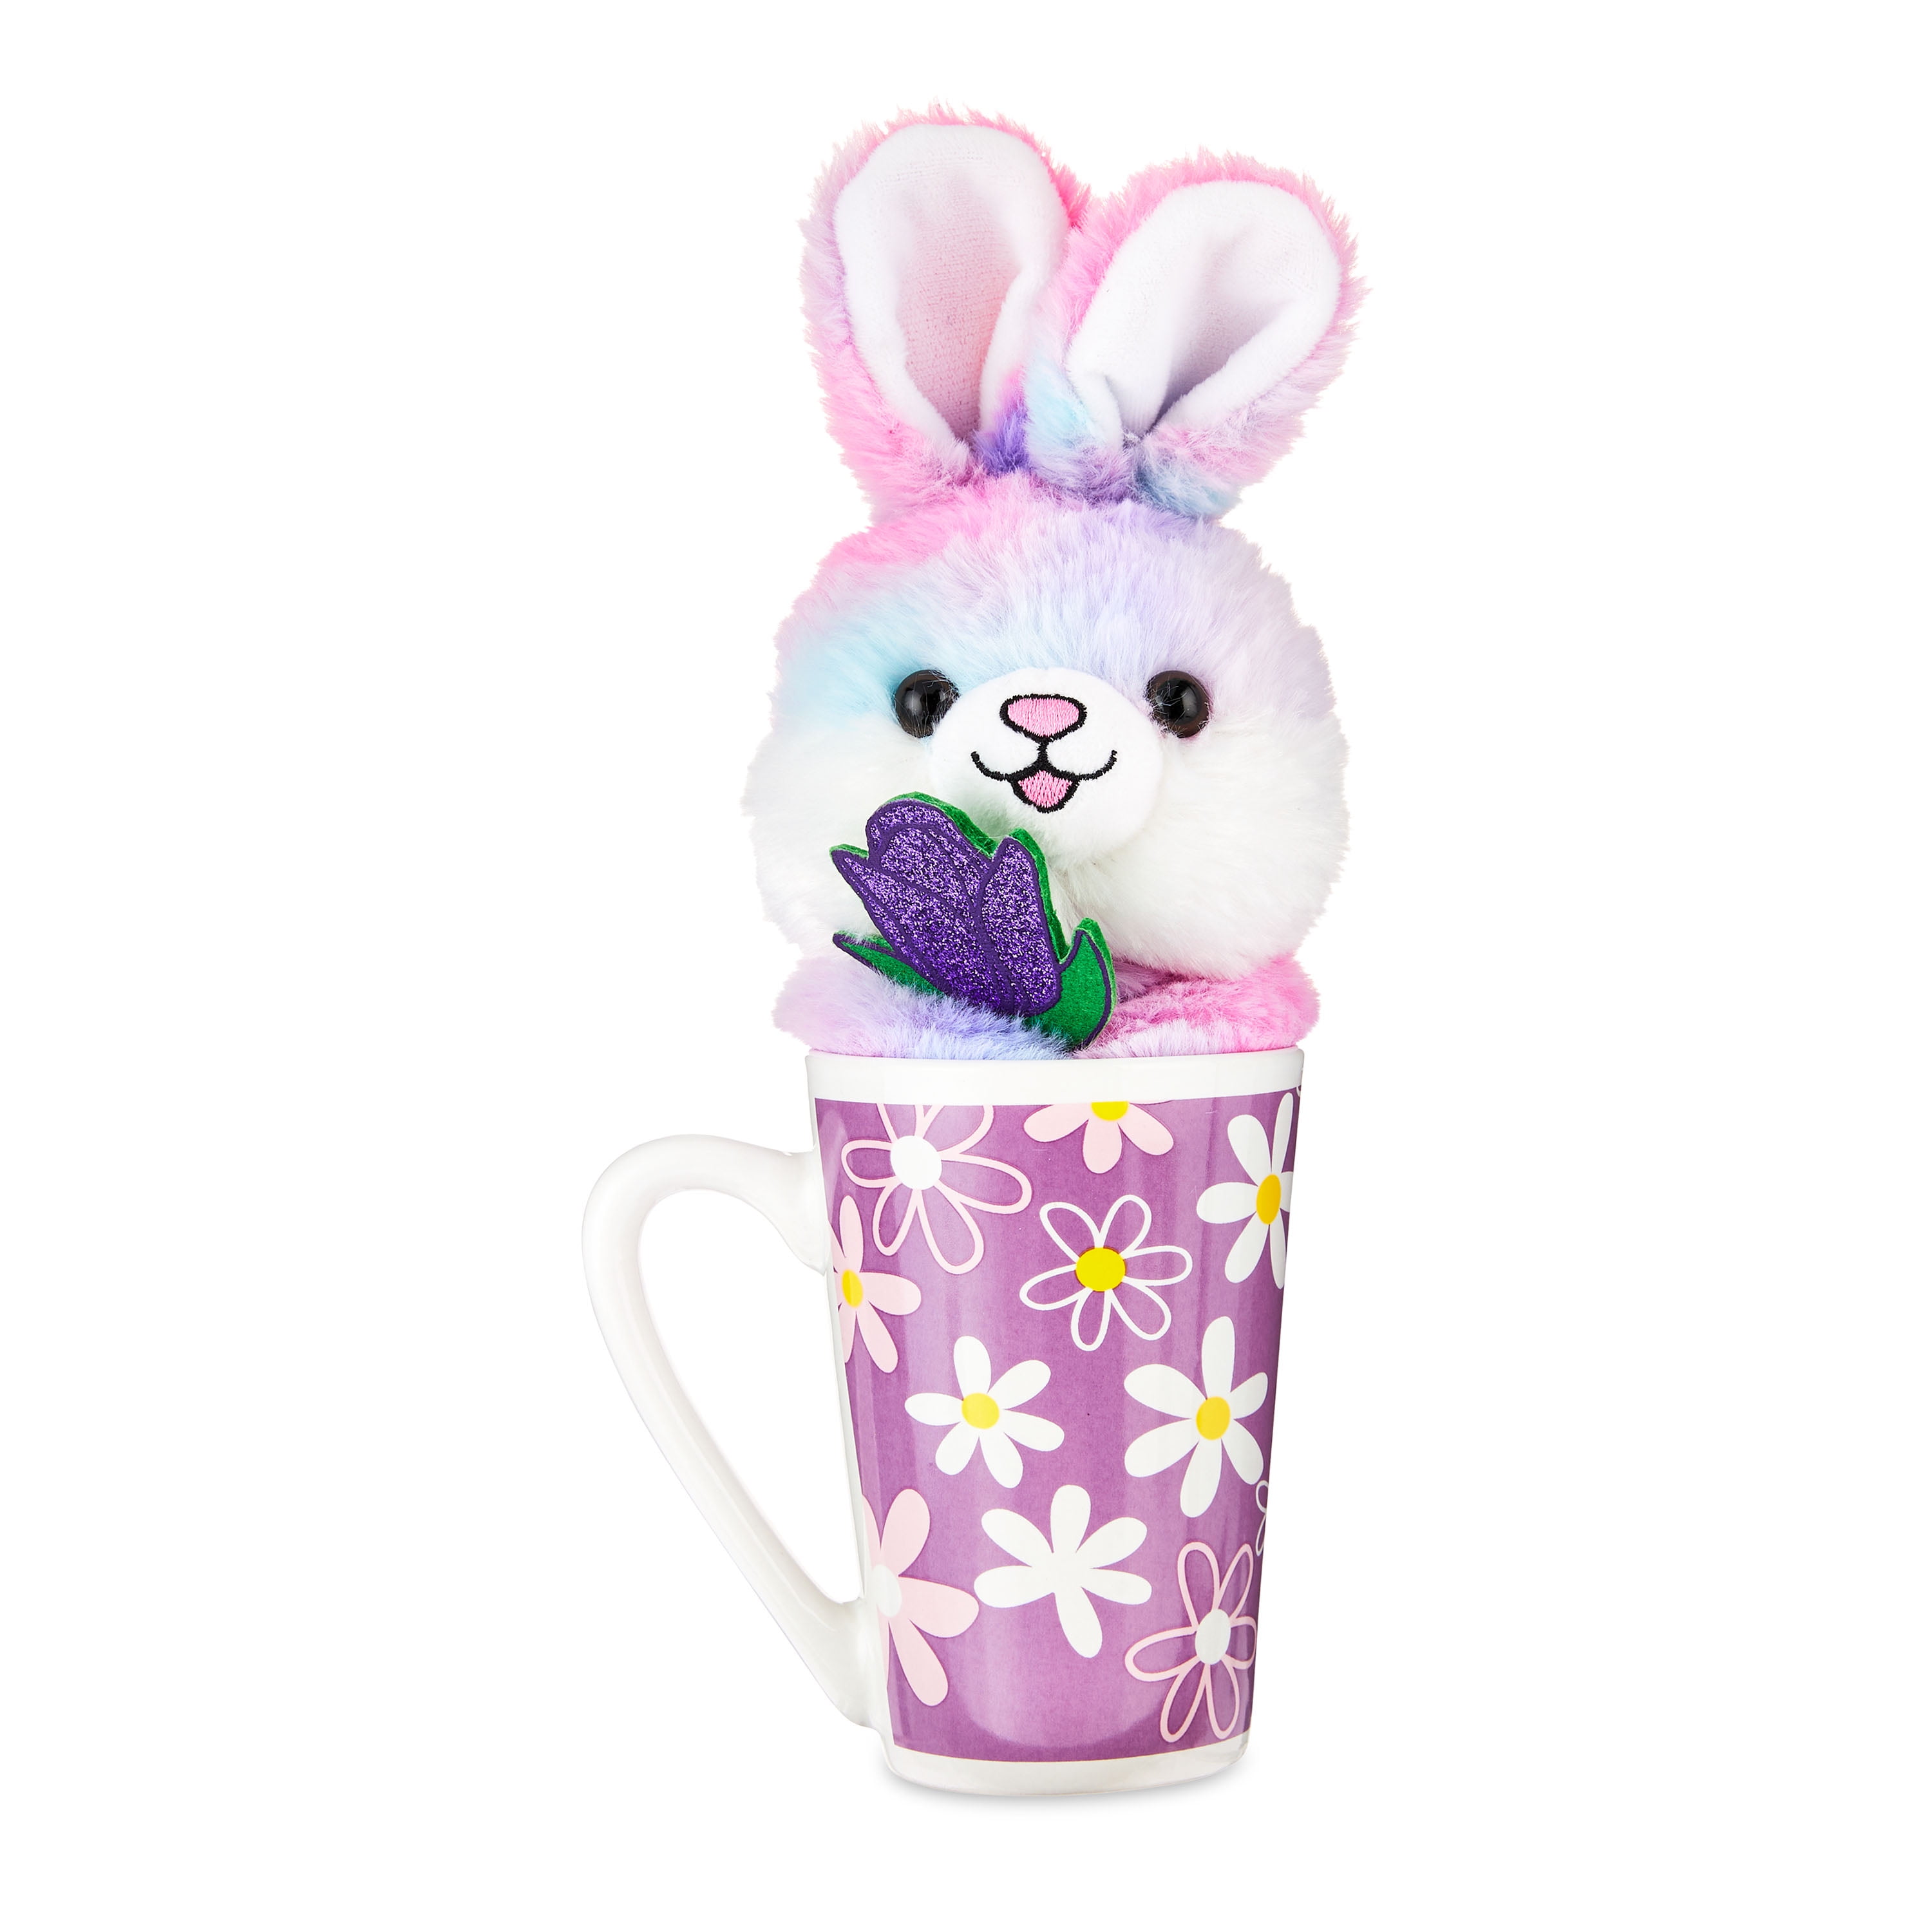 "Way to Celebrate! Easter Plush in Latte Mug, Bunny"